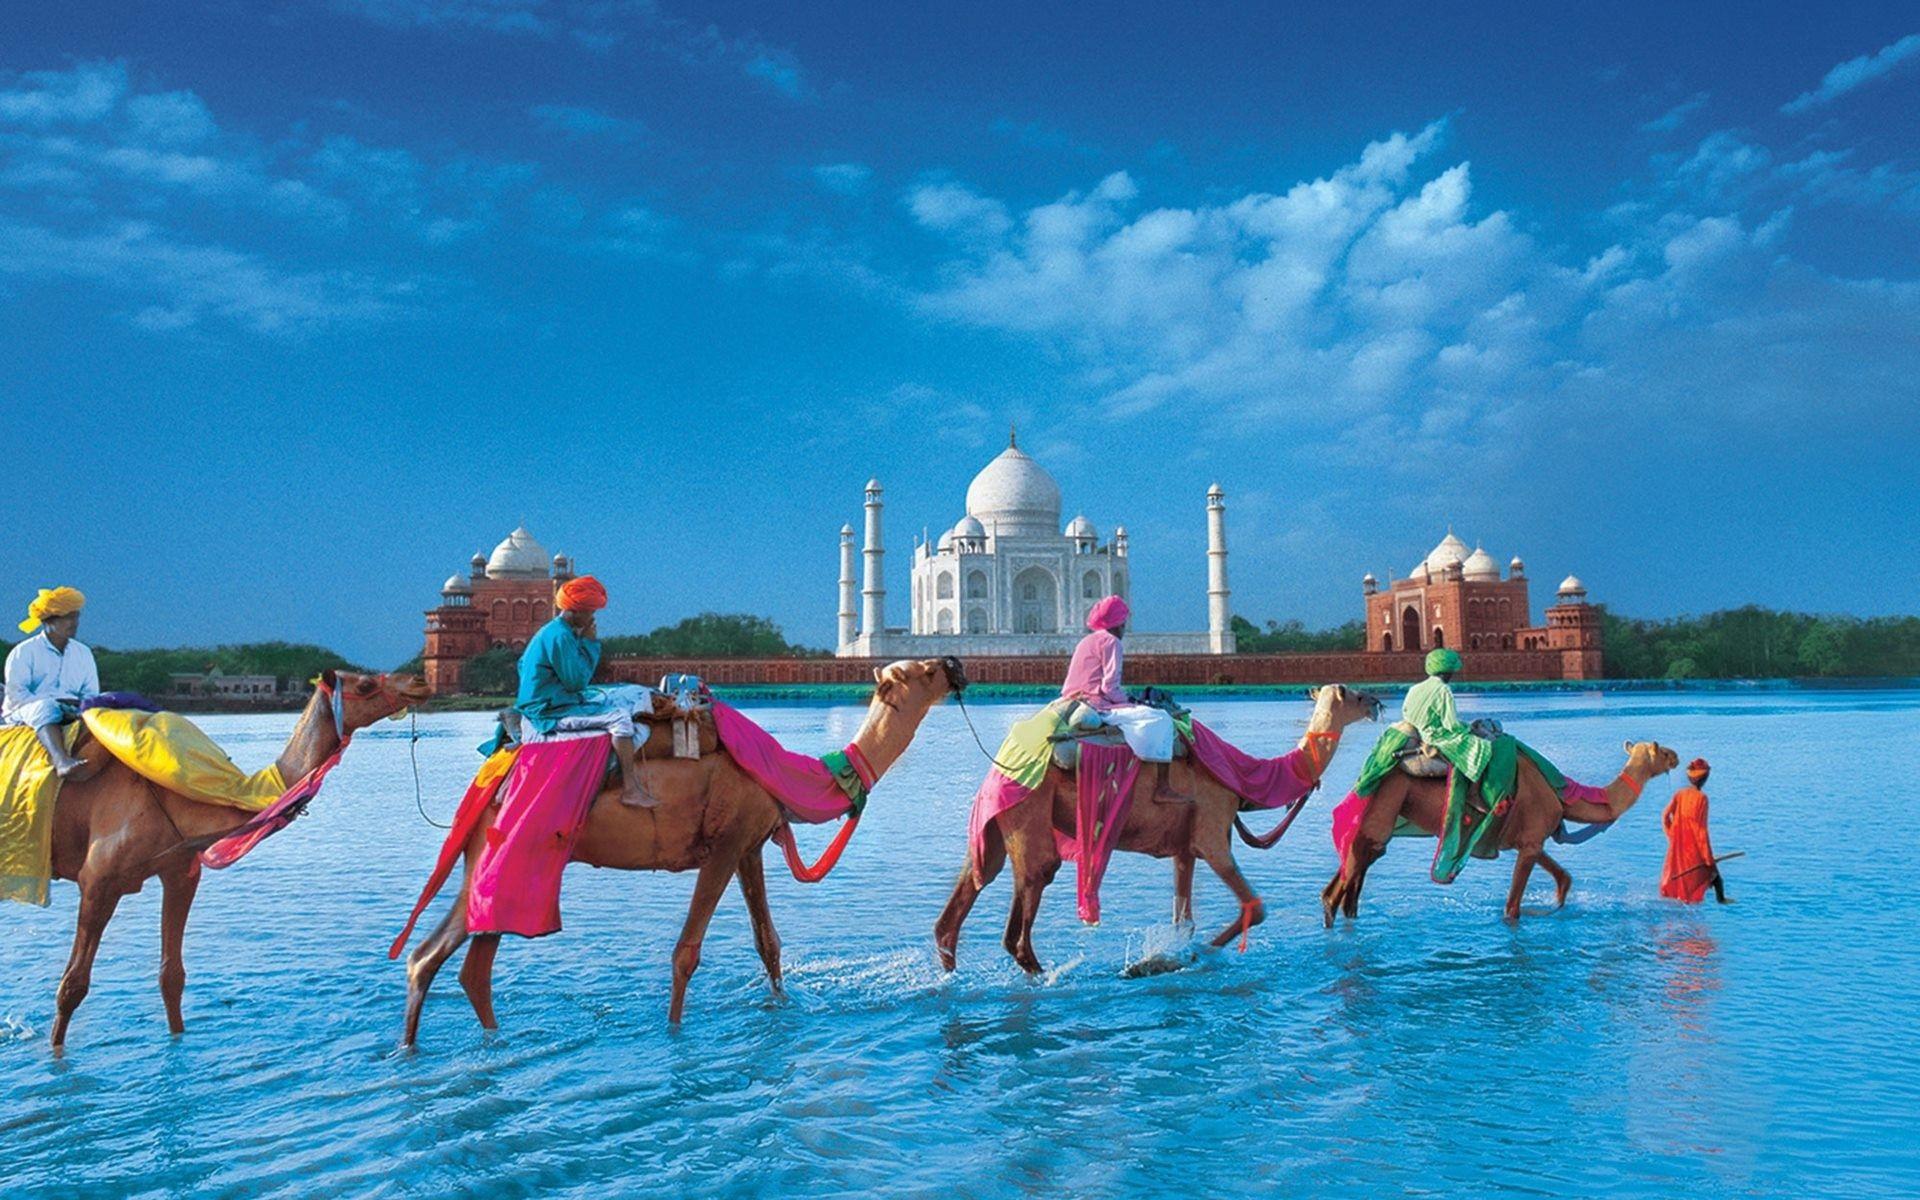 Indian Tourism Wallpaper Free Indian Tourism Background